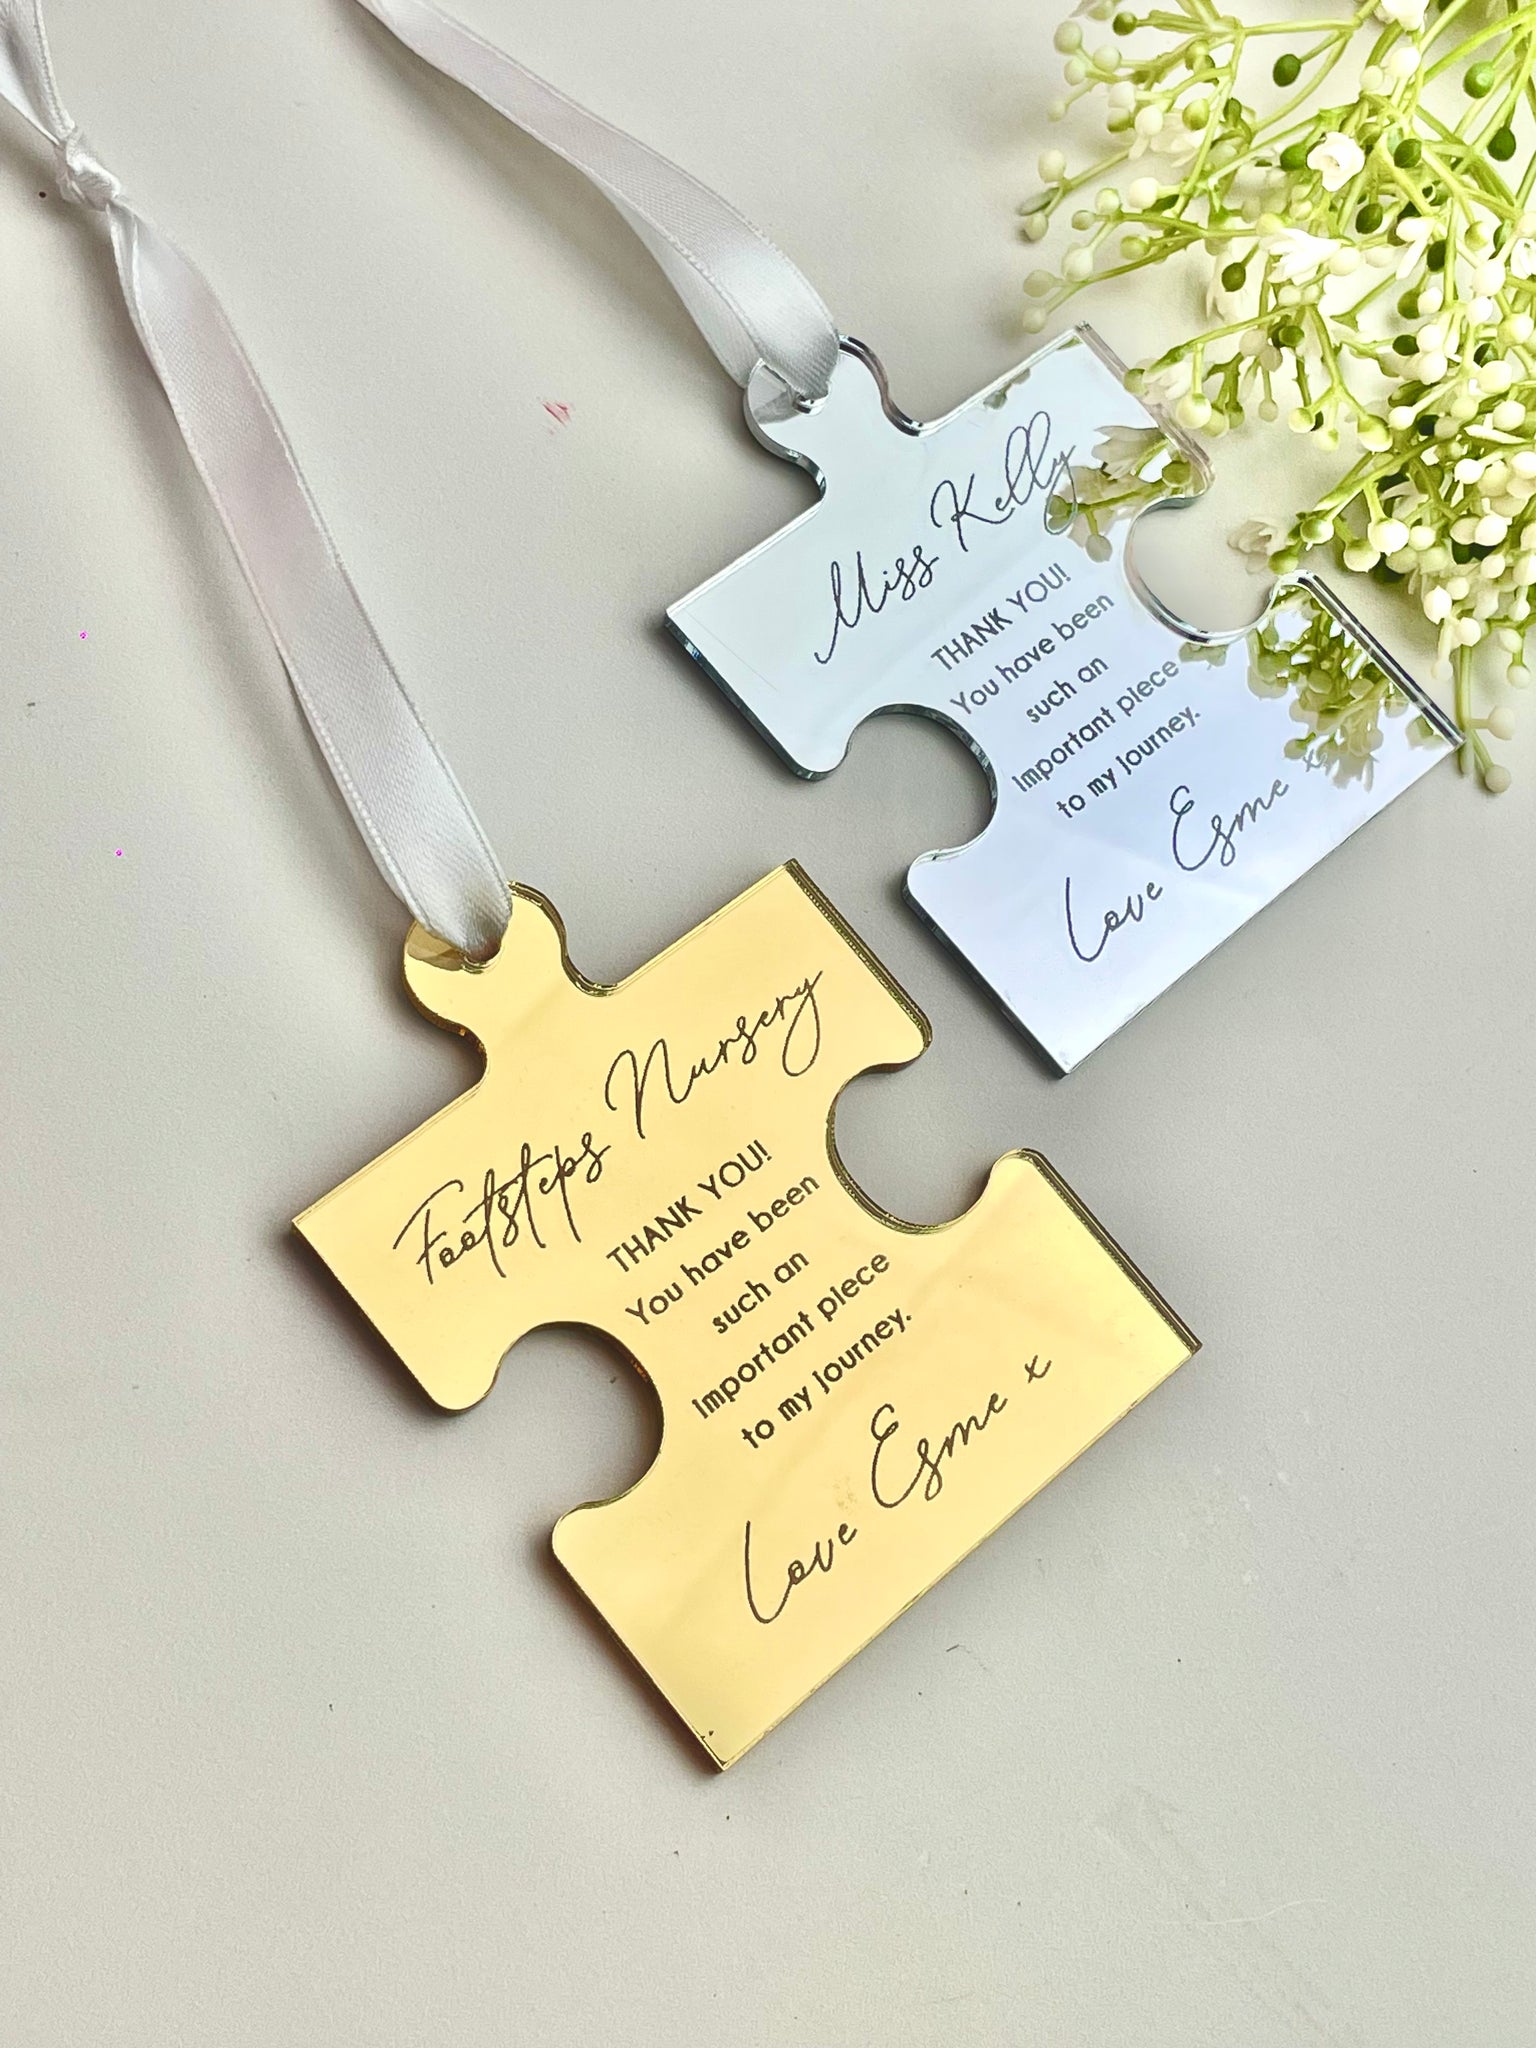 Jigsaw Teacher Gift - Acrylic puzzle piece keyring gift tag charm